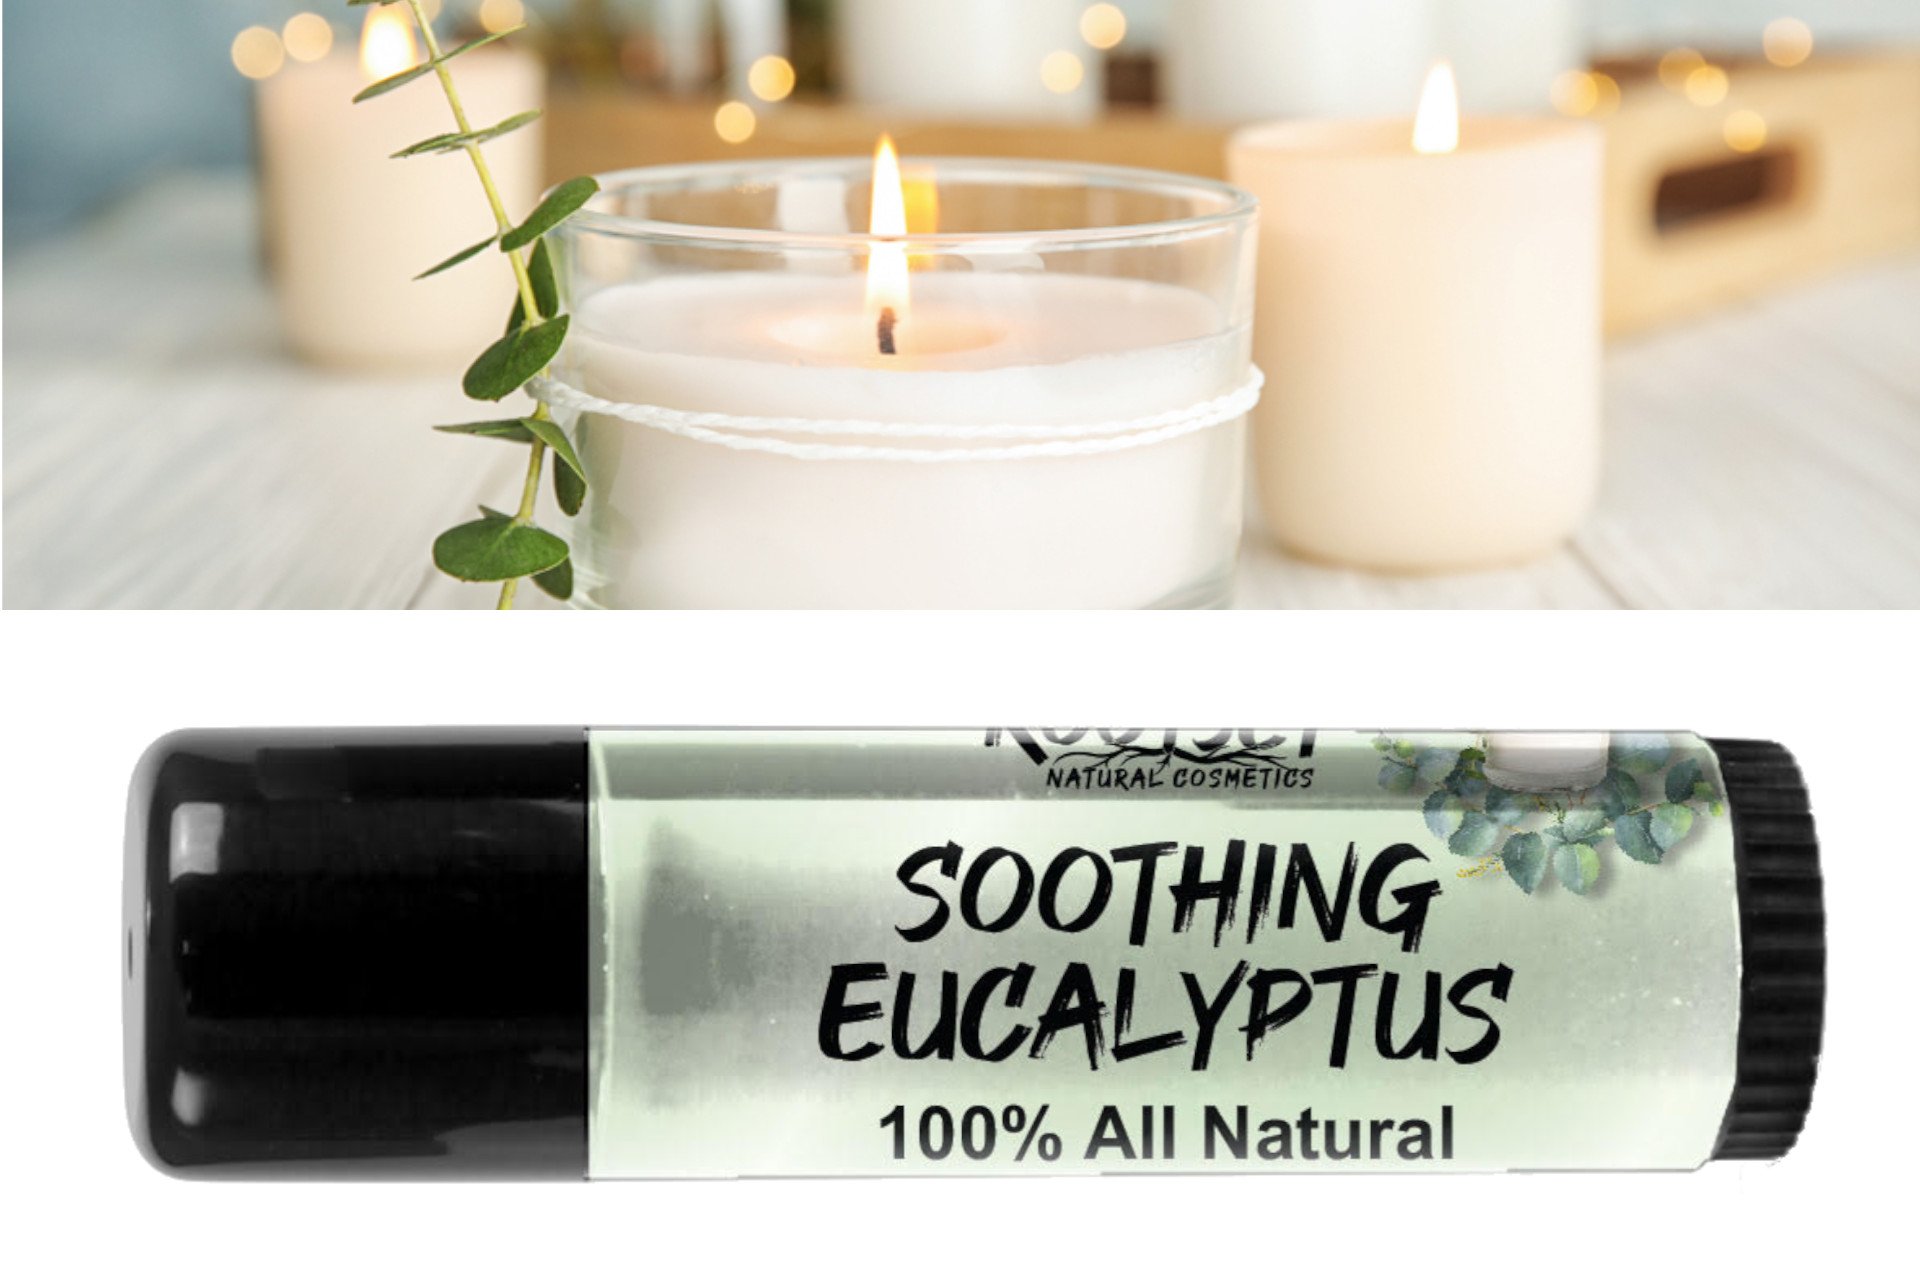 Soothing Eucalyptus Jumbo 100% All Natural Lip & Body Balm.jpg